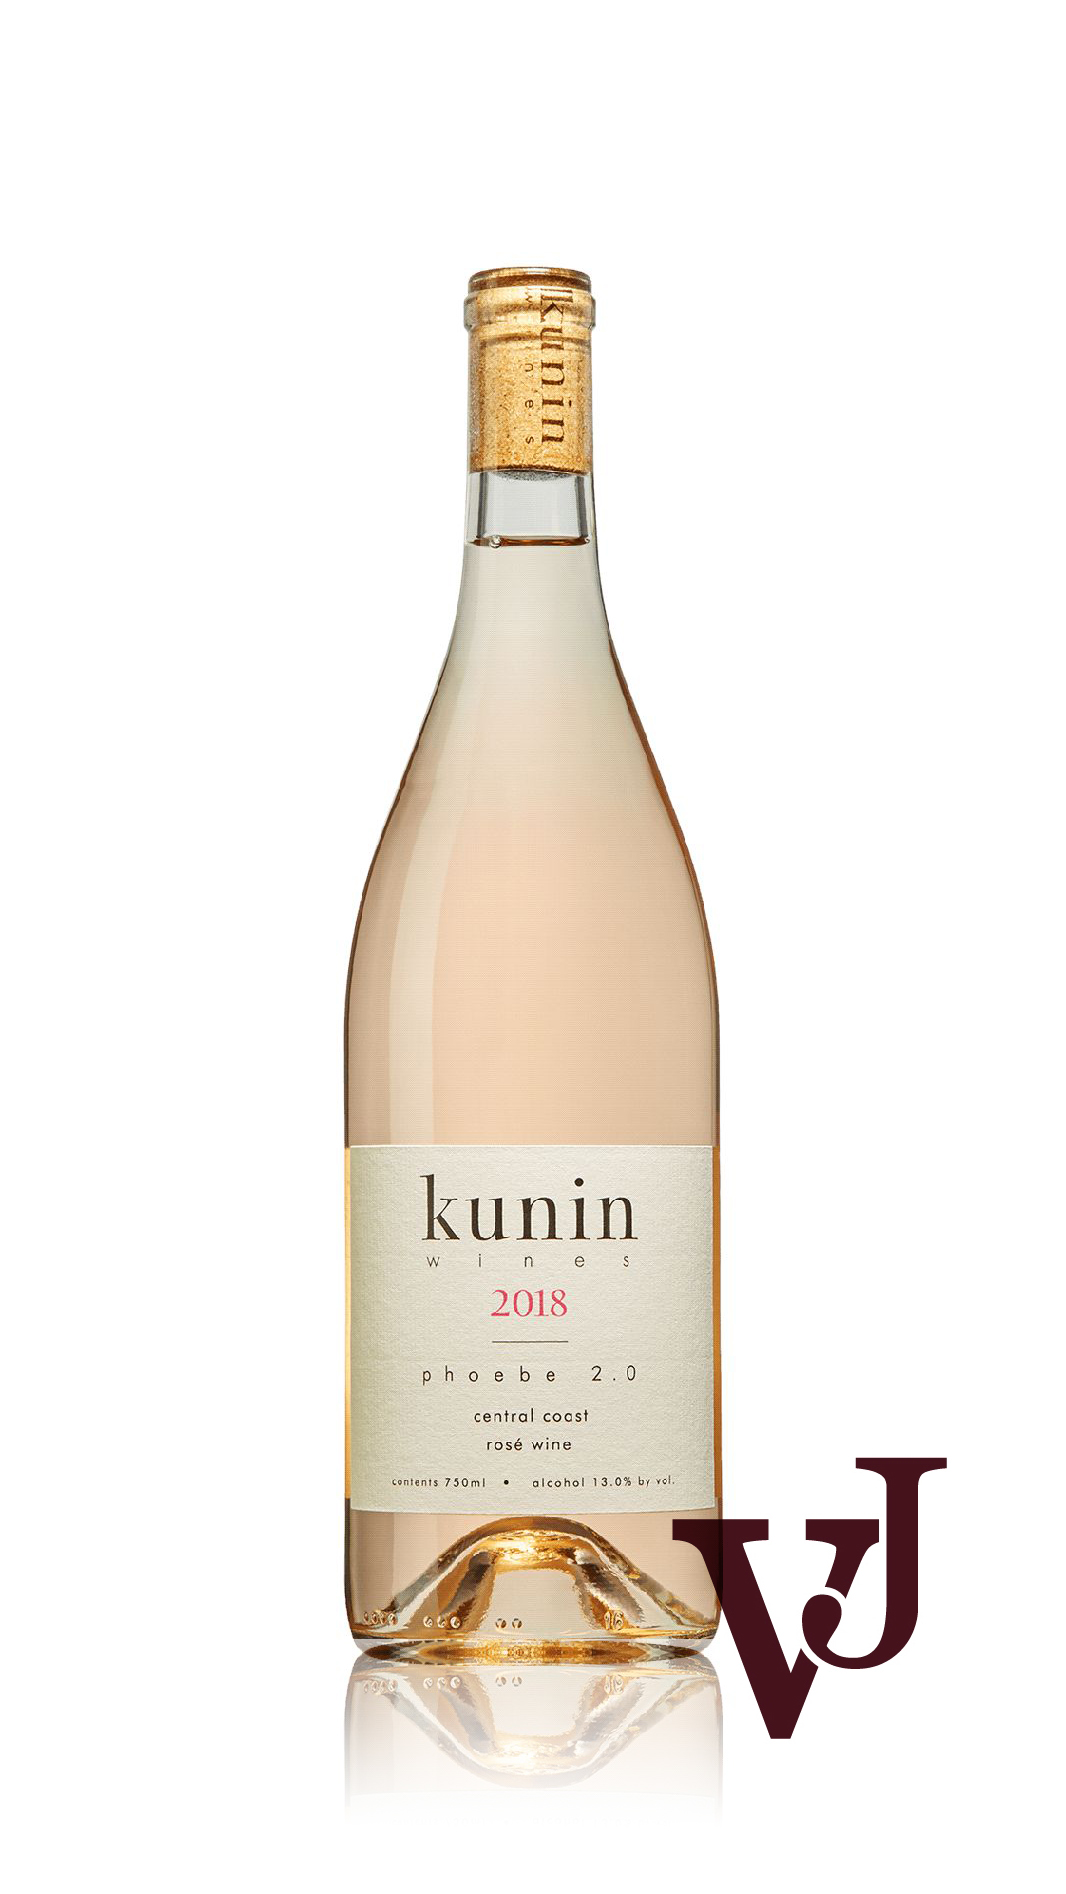 Kunin Wines Phoebe 2.0